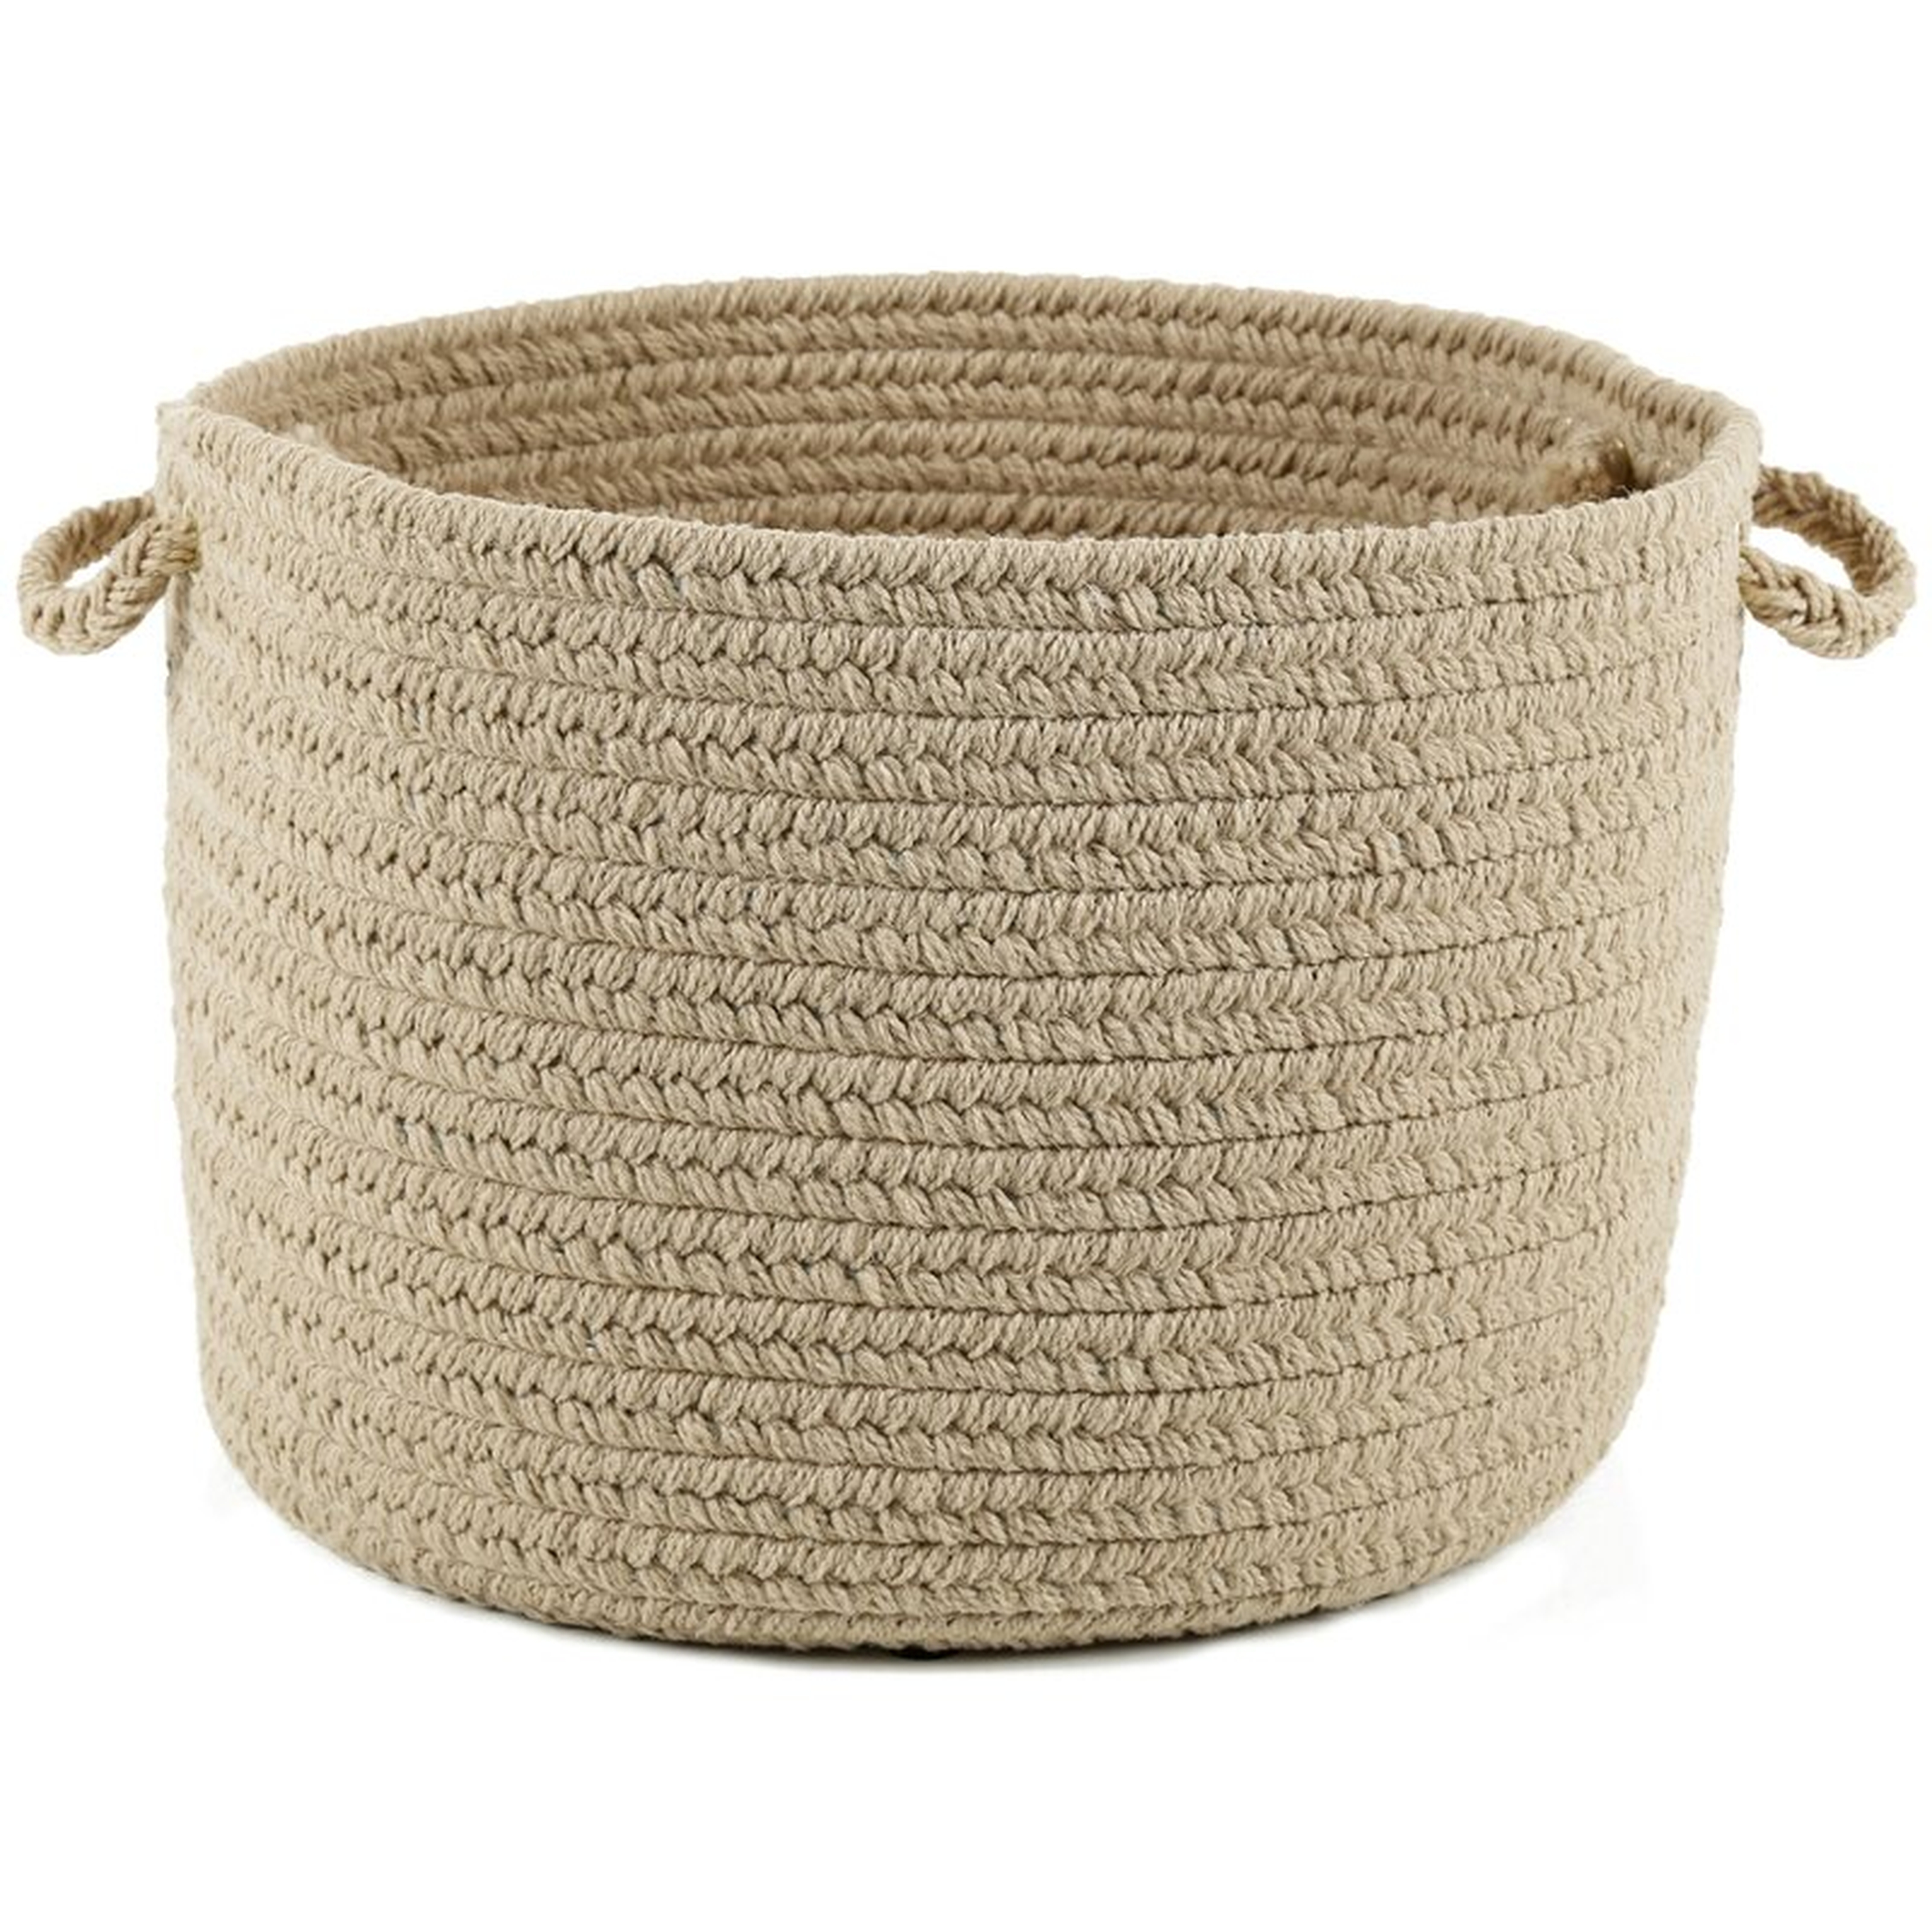 Misha Solid Basket - Sand Beige - Wayfair